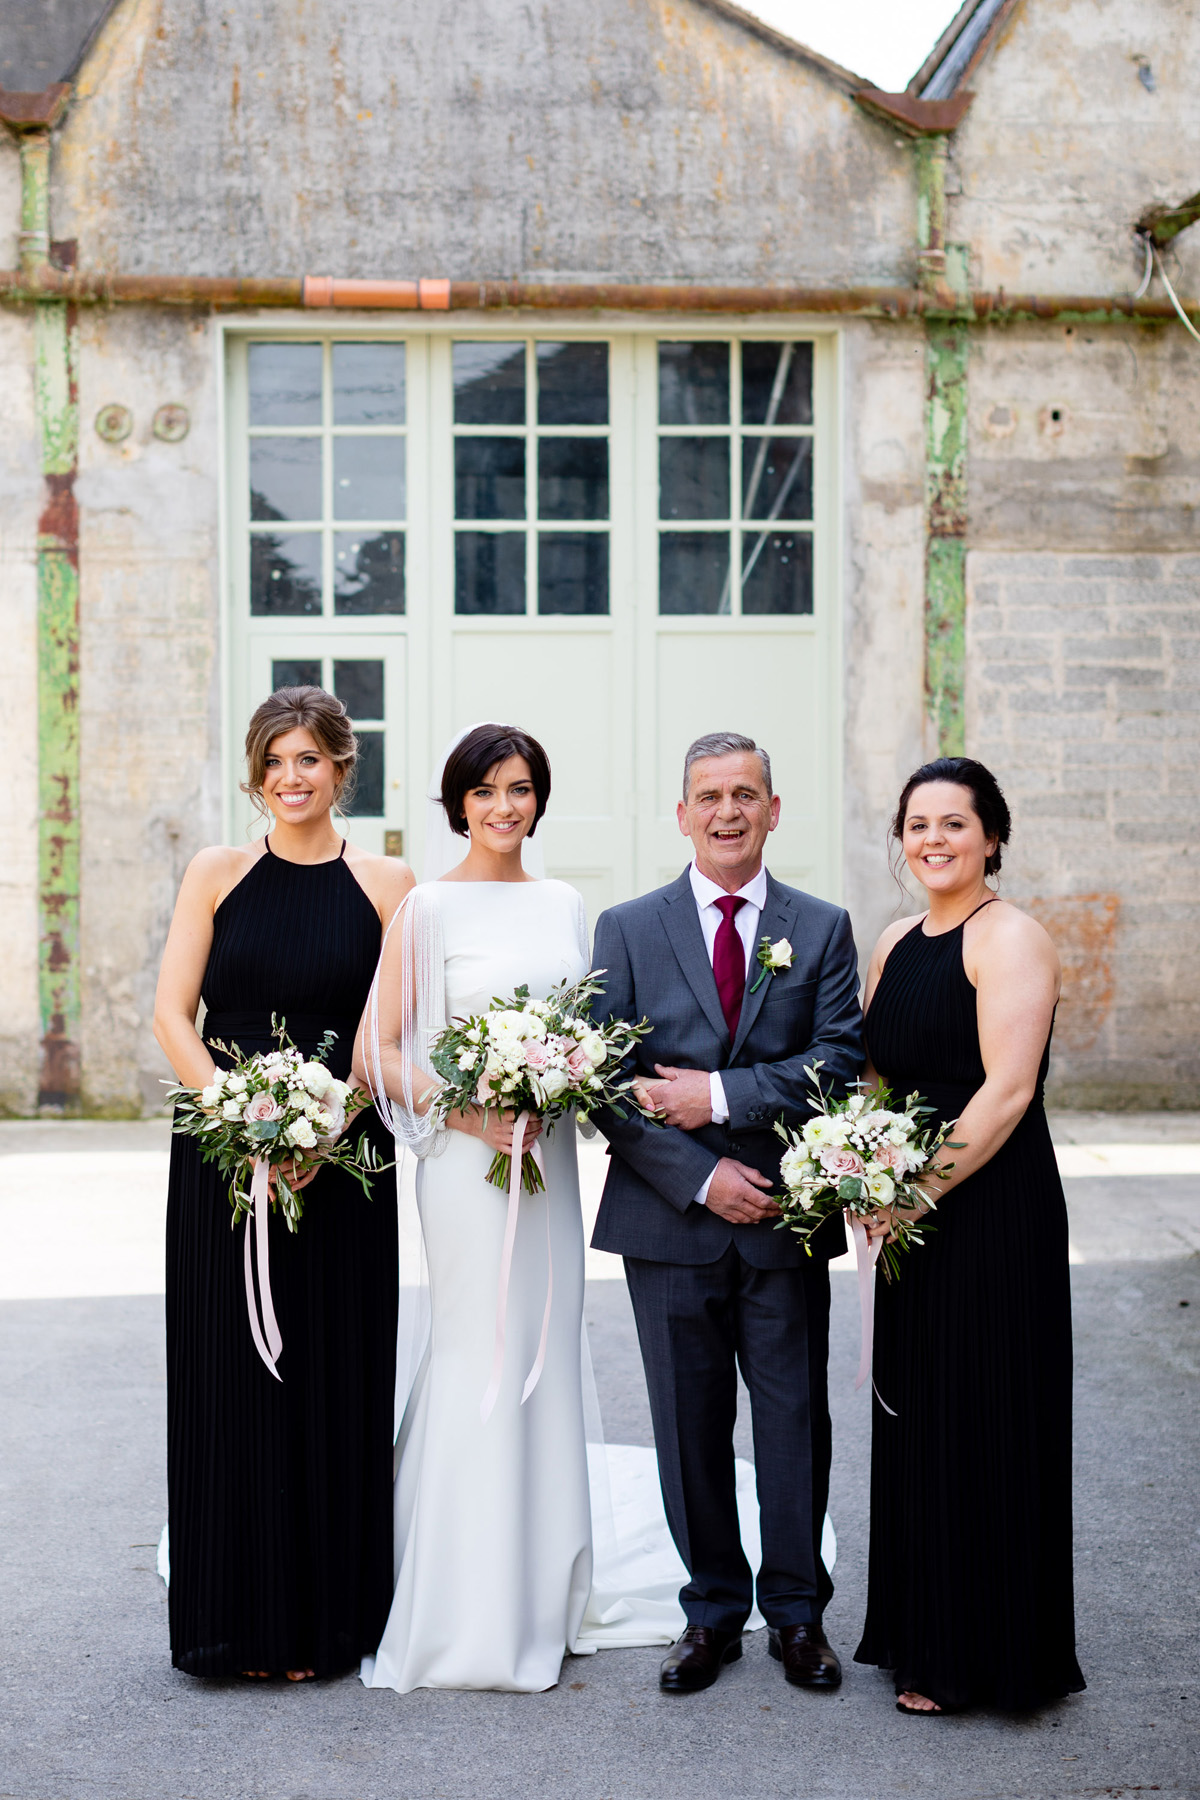 58 Millhouse Wedding In Ireland Atelier Pronovias